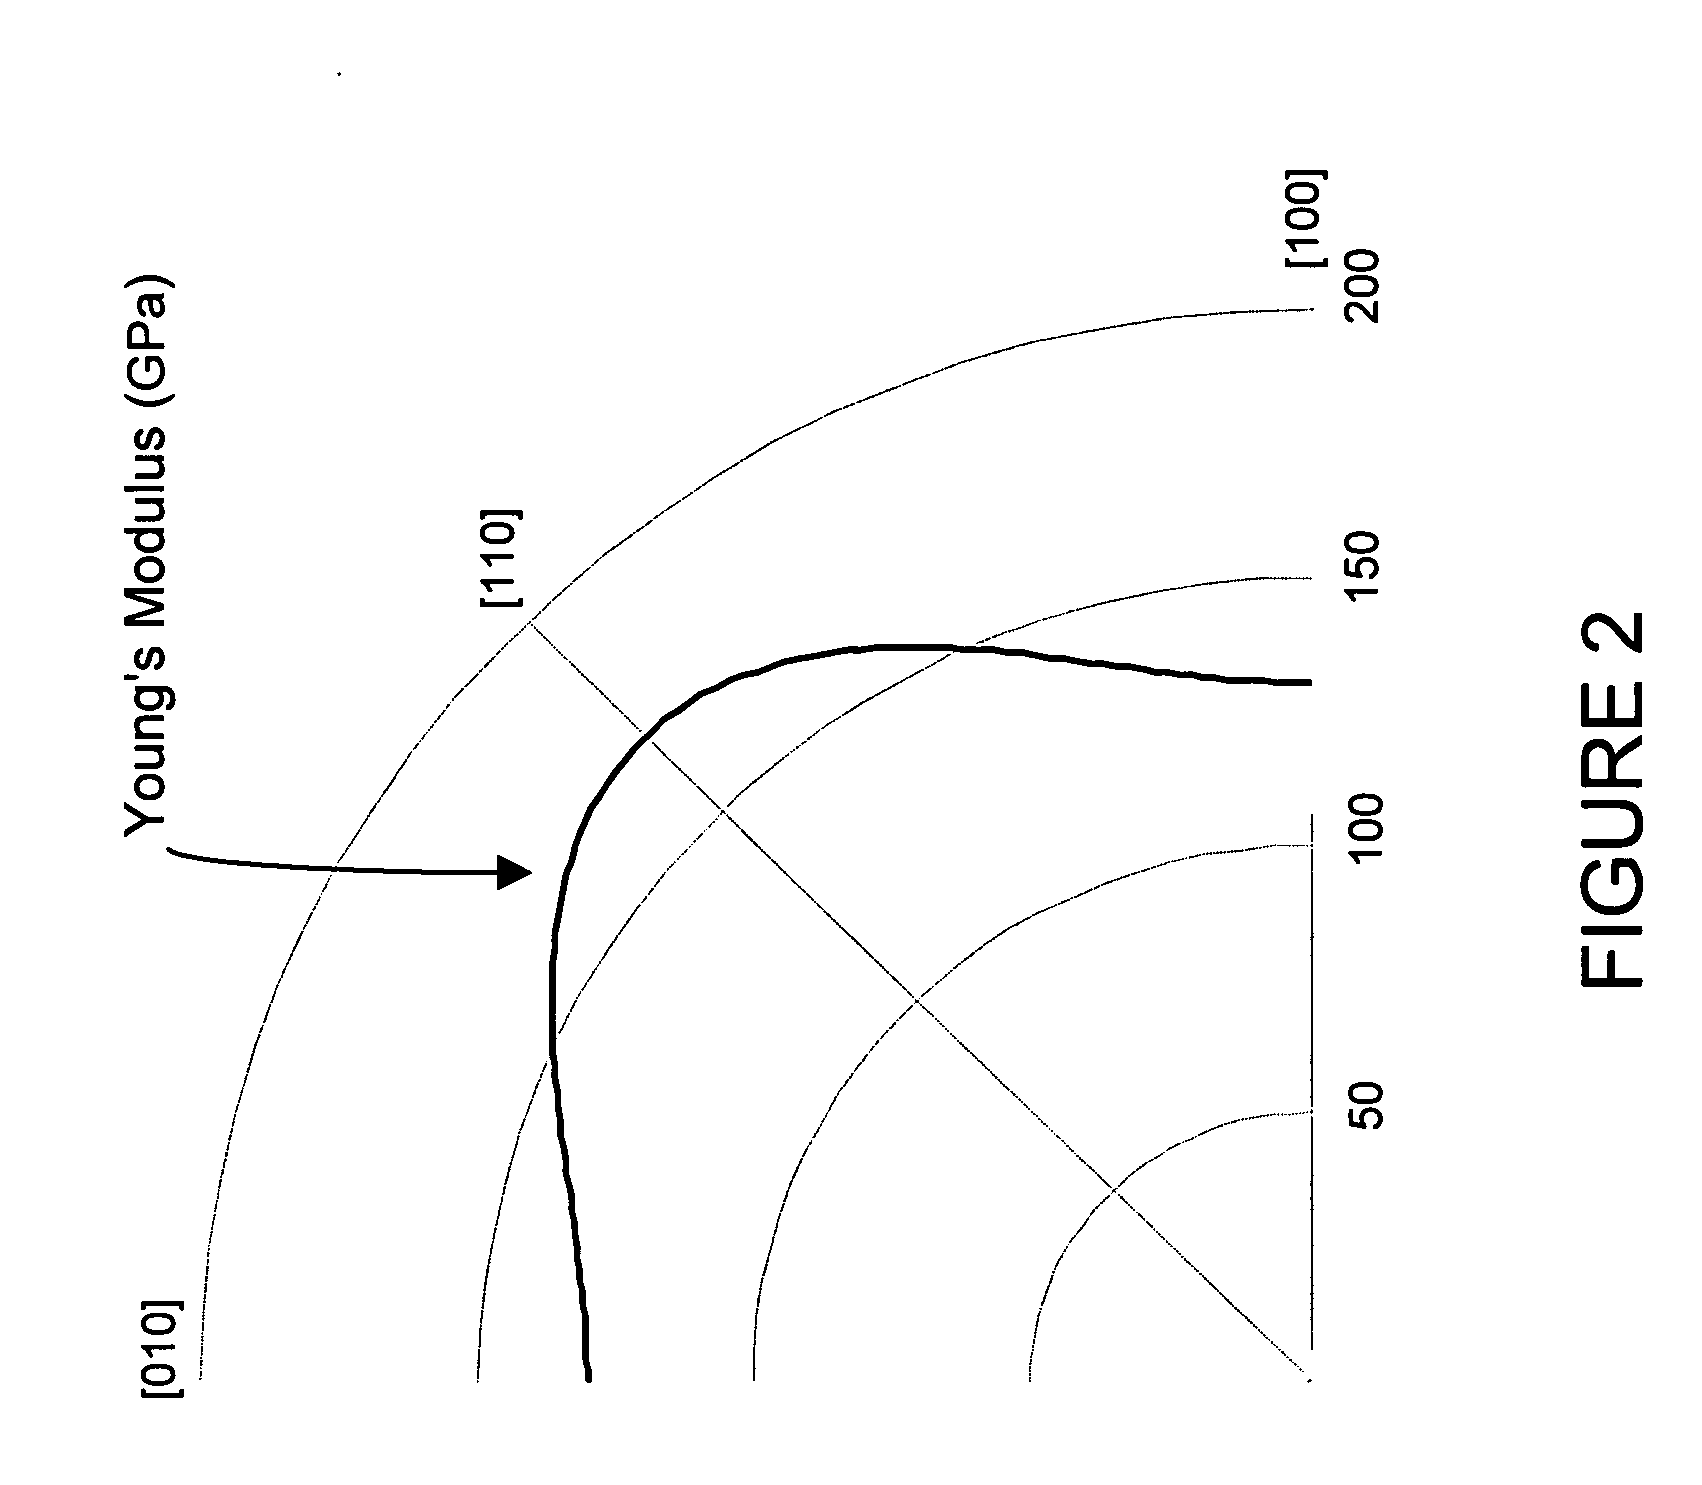 Microelectromechanical oscillator having temperature measurement system, and method of operating same